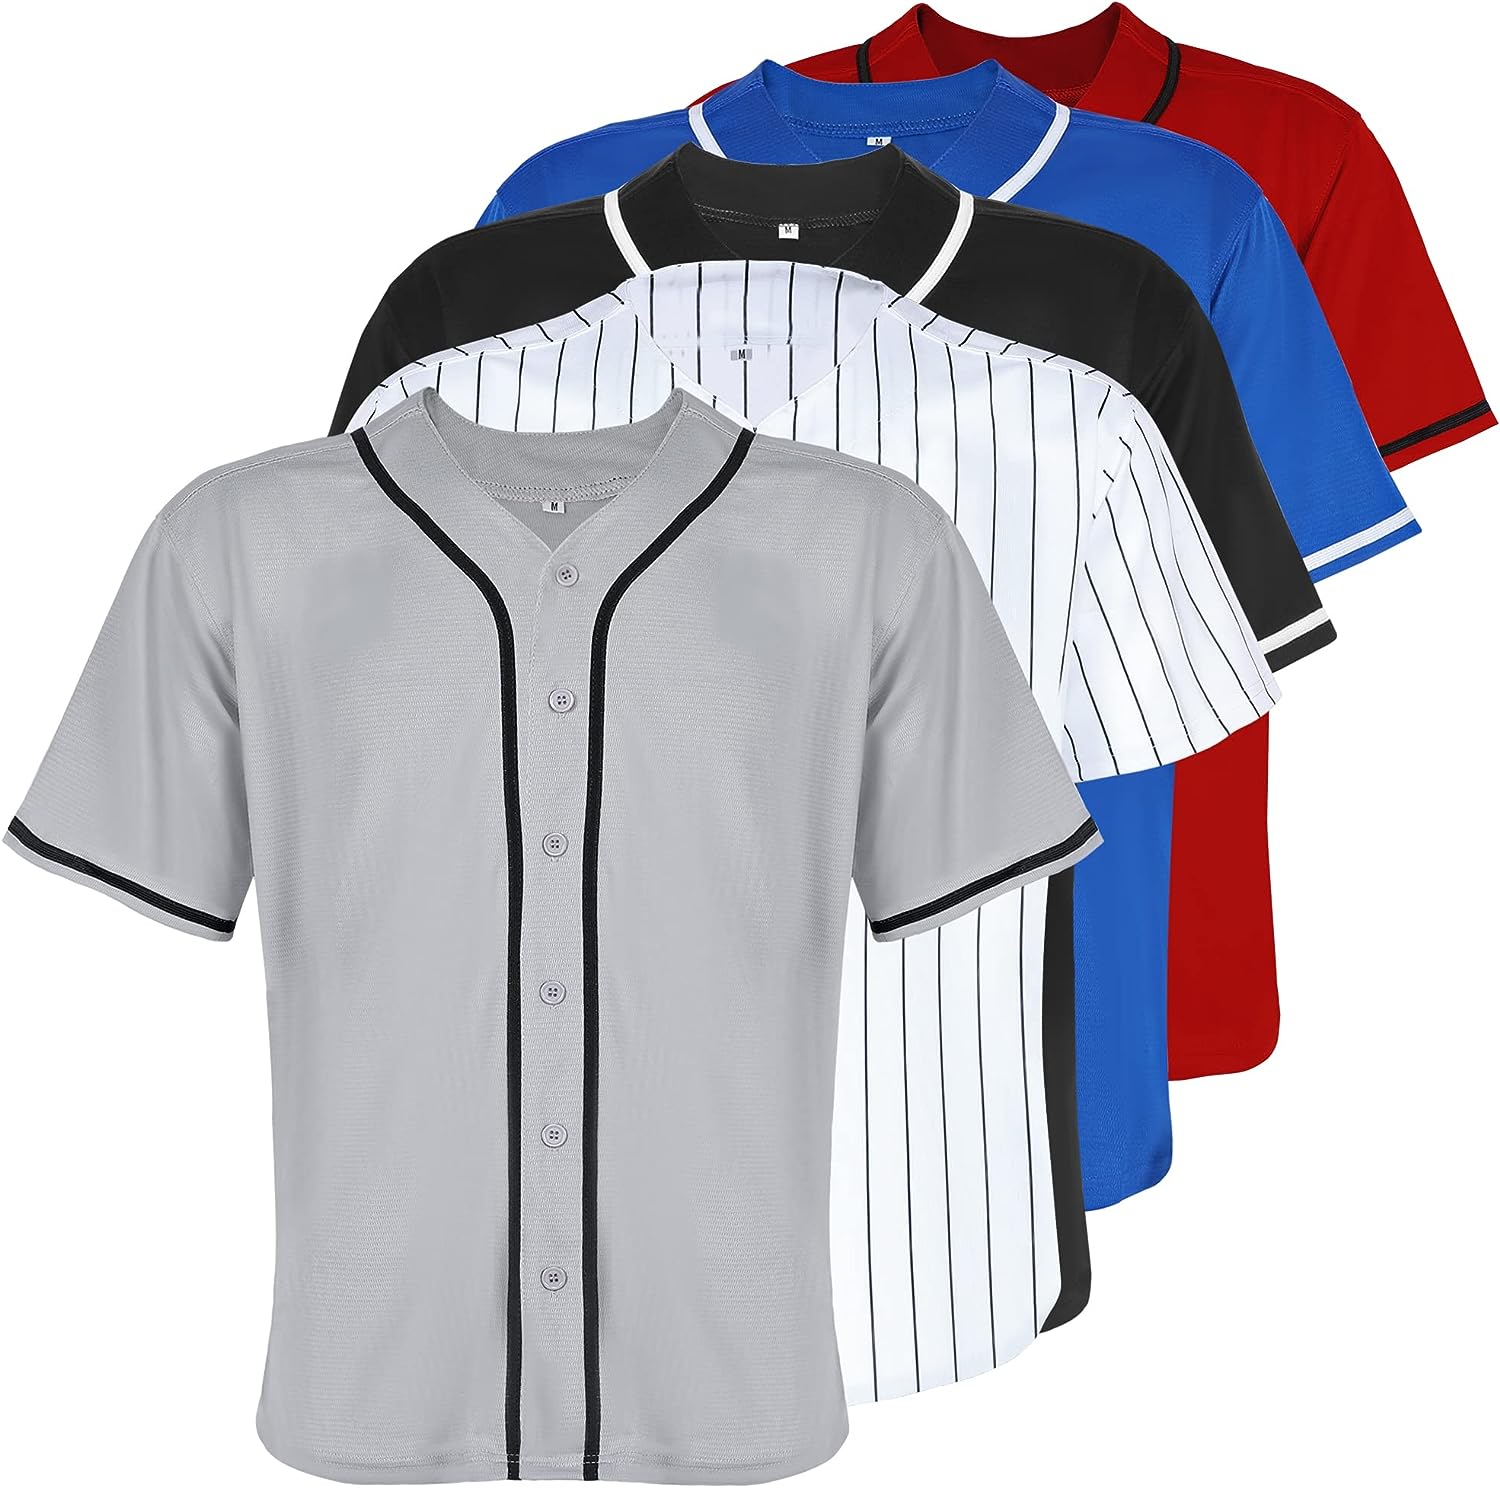  TKJPYWYH Blank Baseball Jersey Button Down Shirts